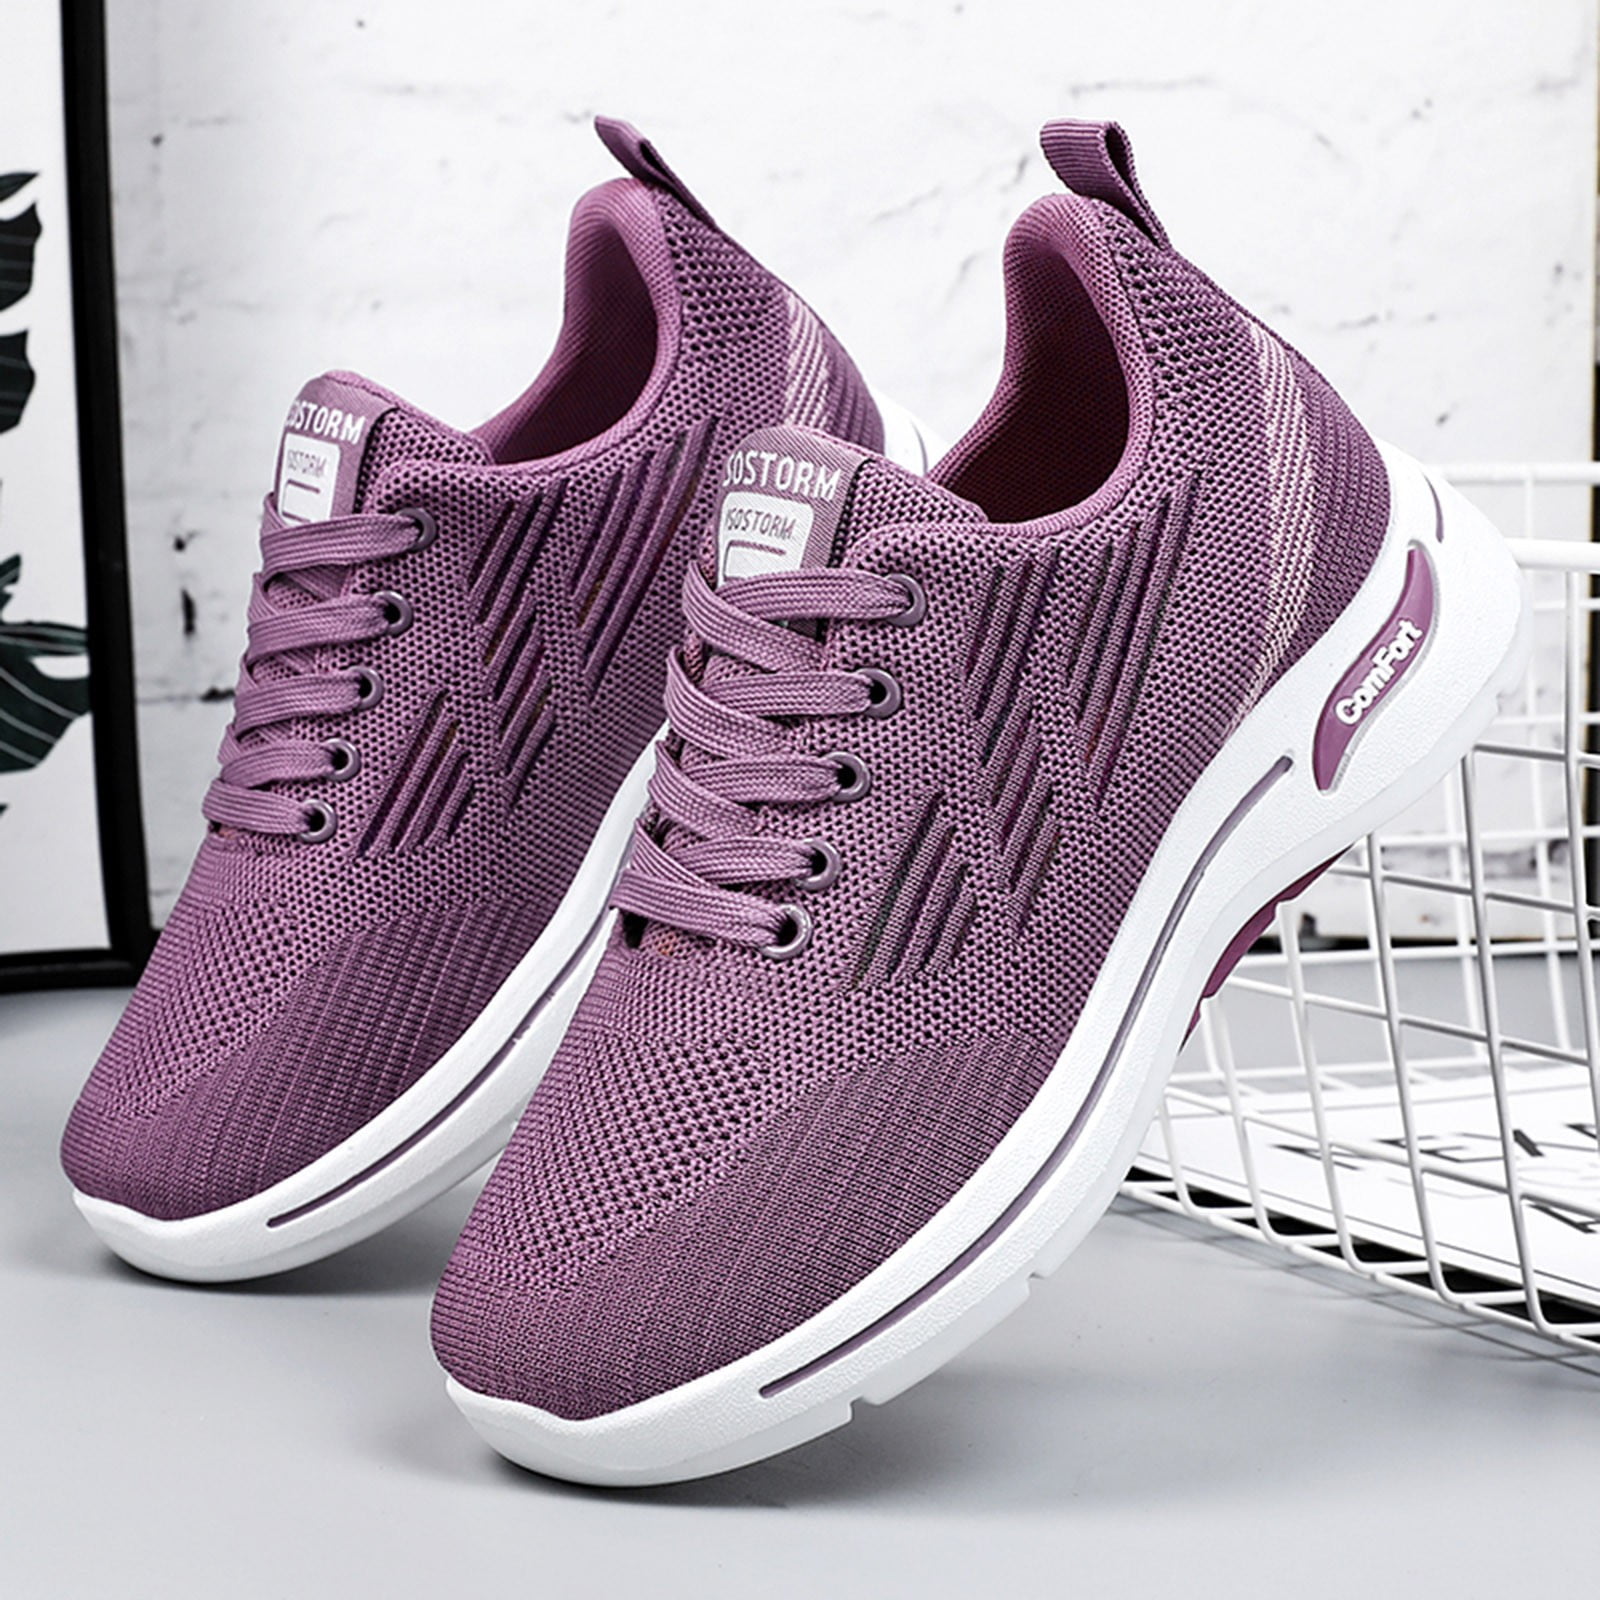  BELOS Women's Breathable Walking Tennis Shoes Lightweight Slip  On Casual Sneakers for Gym Travel Work(6B(M) US, Purple)